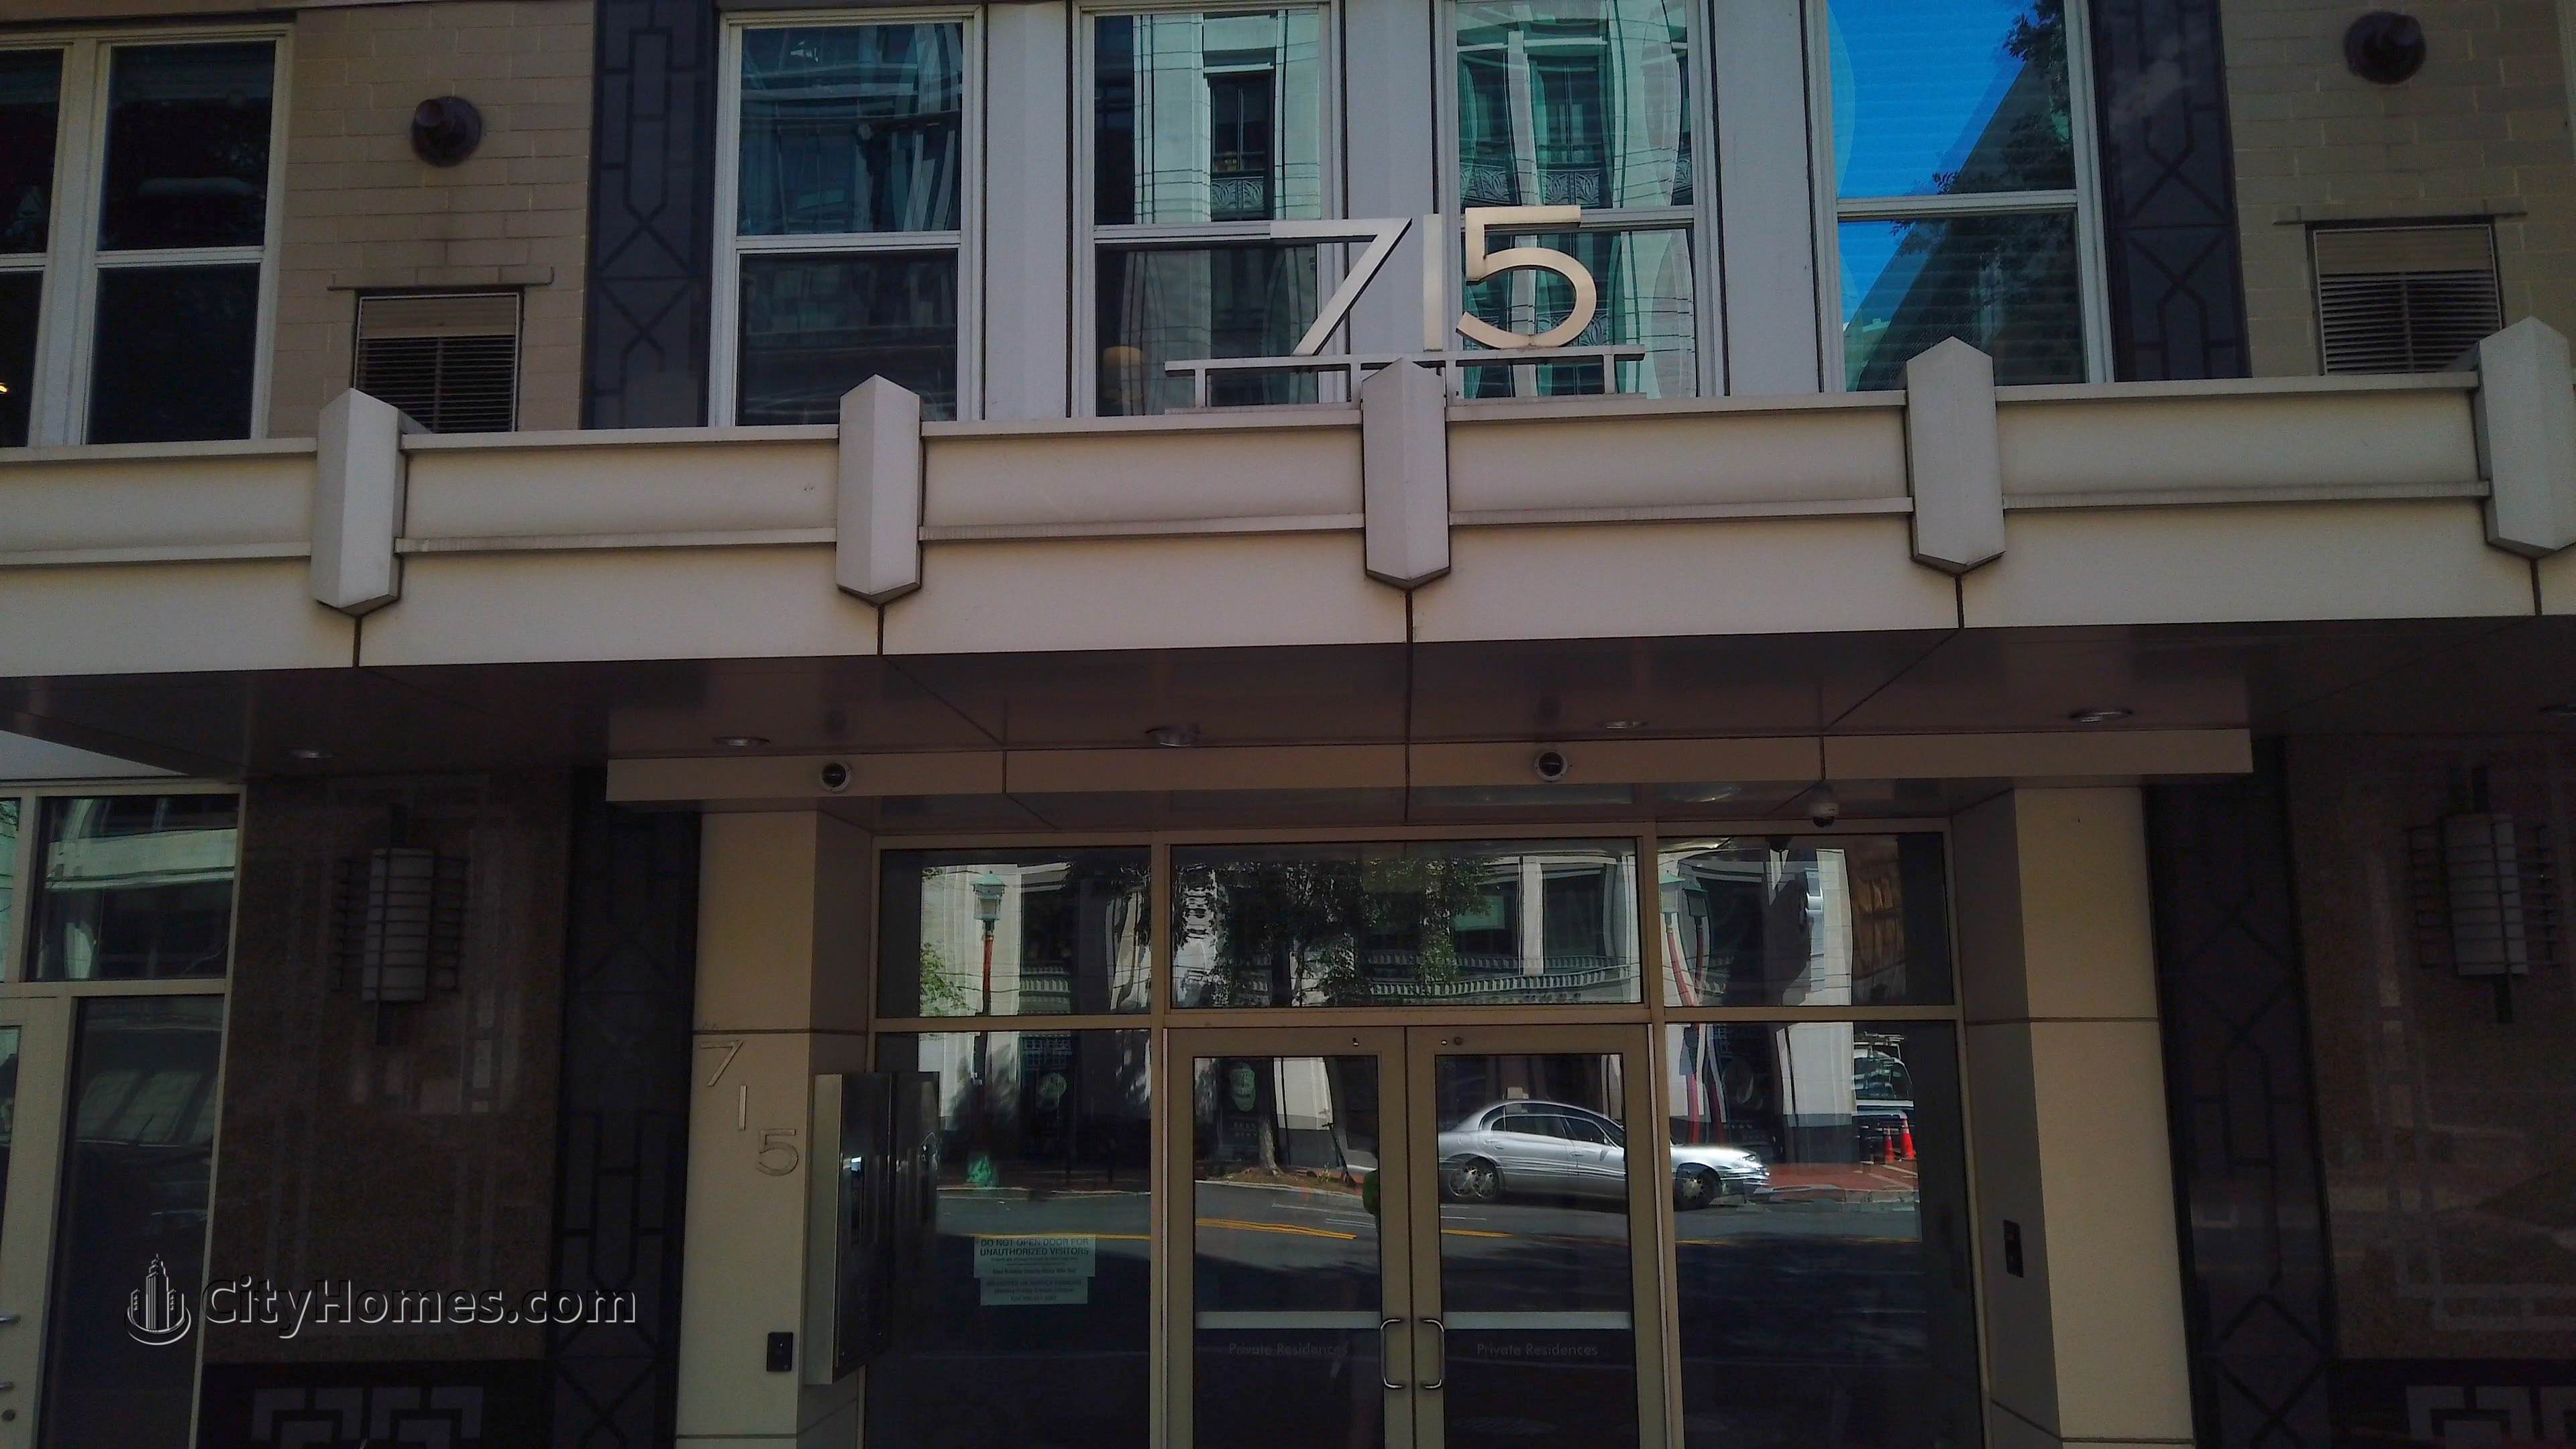 The Cosmopolitan gebouw op 715 6th St NW, Chinatown, Washington, DC 20001